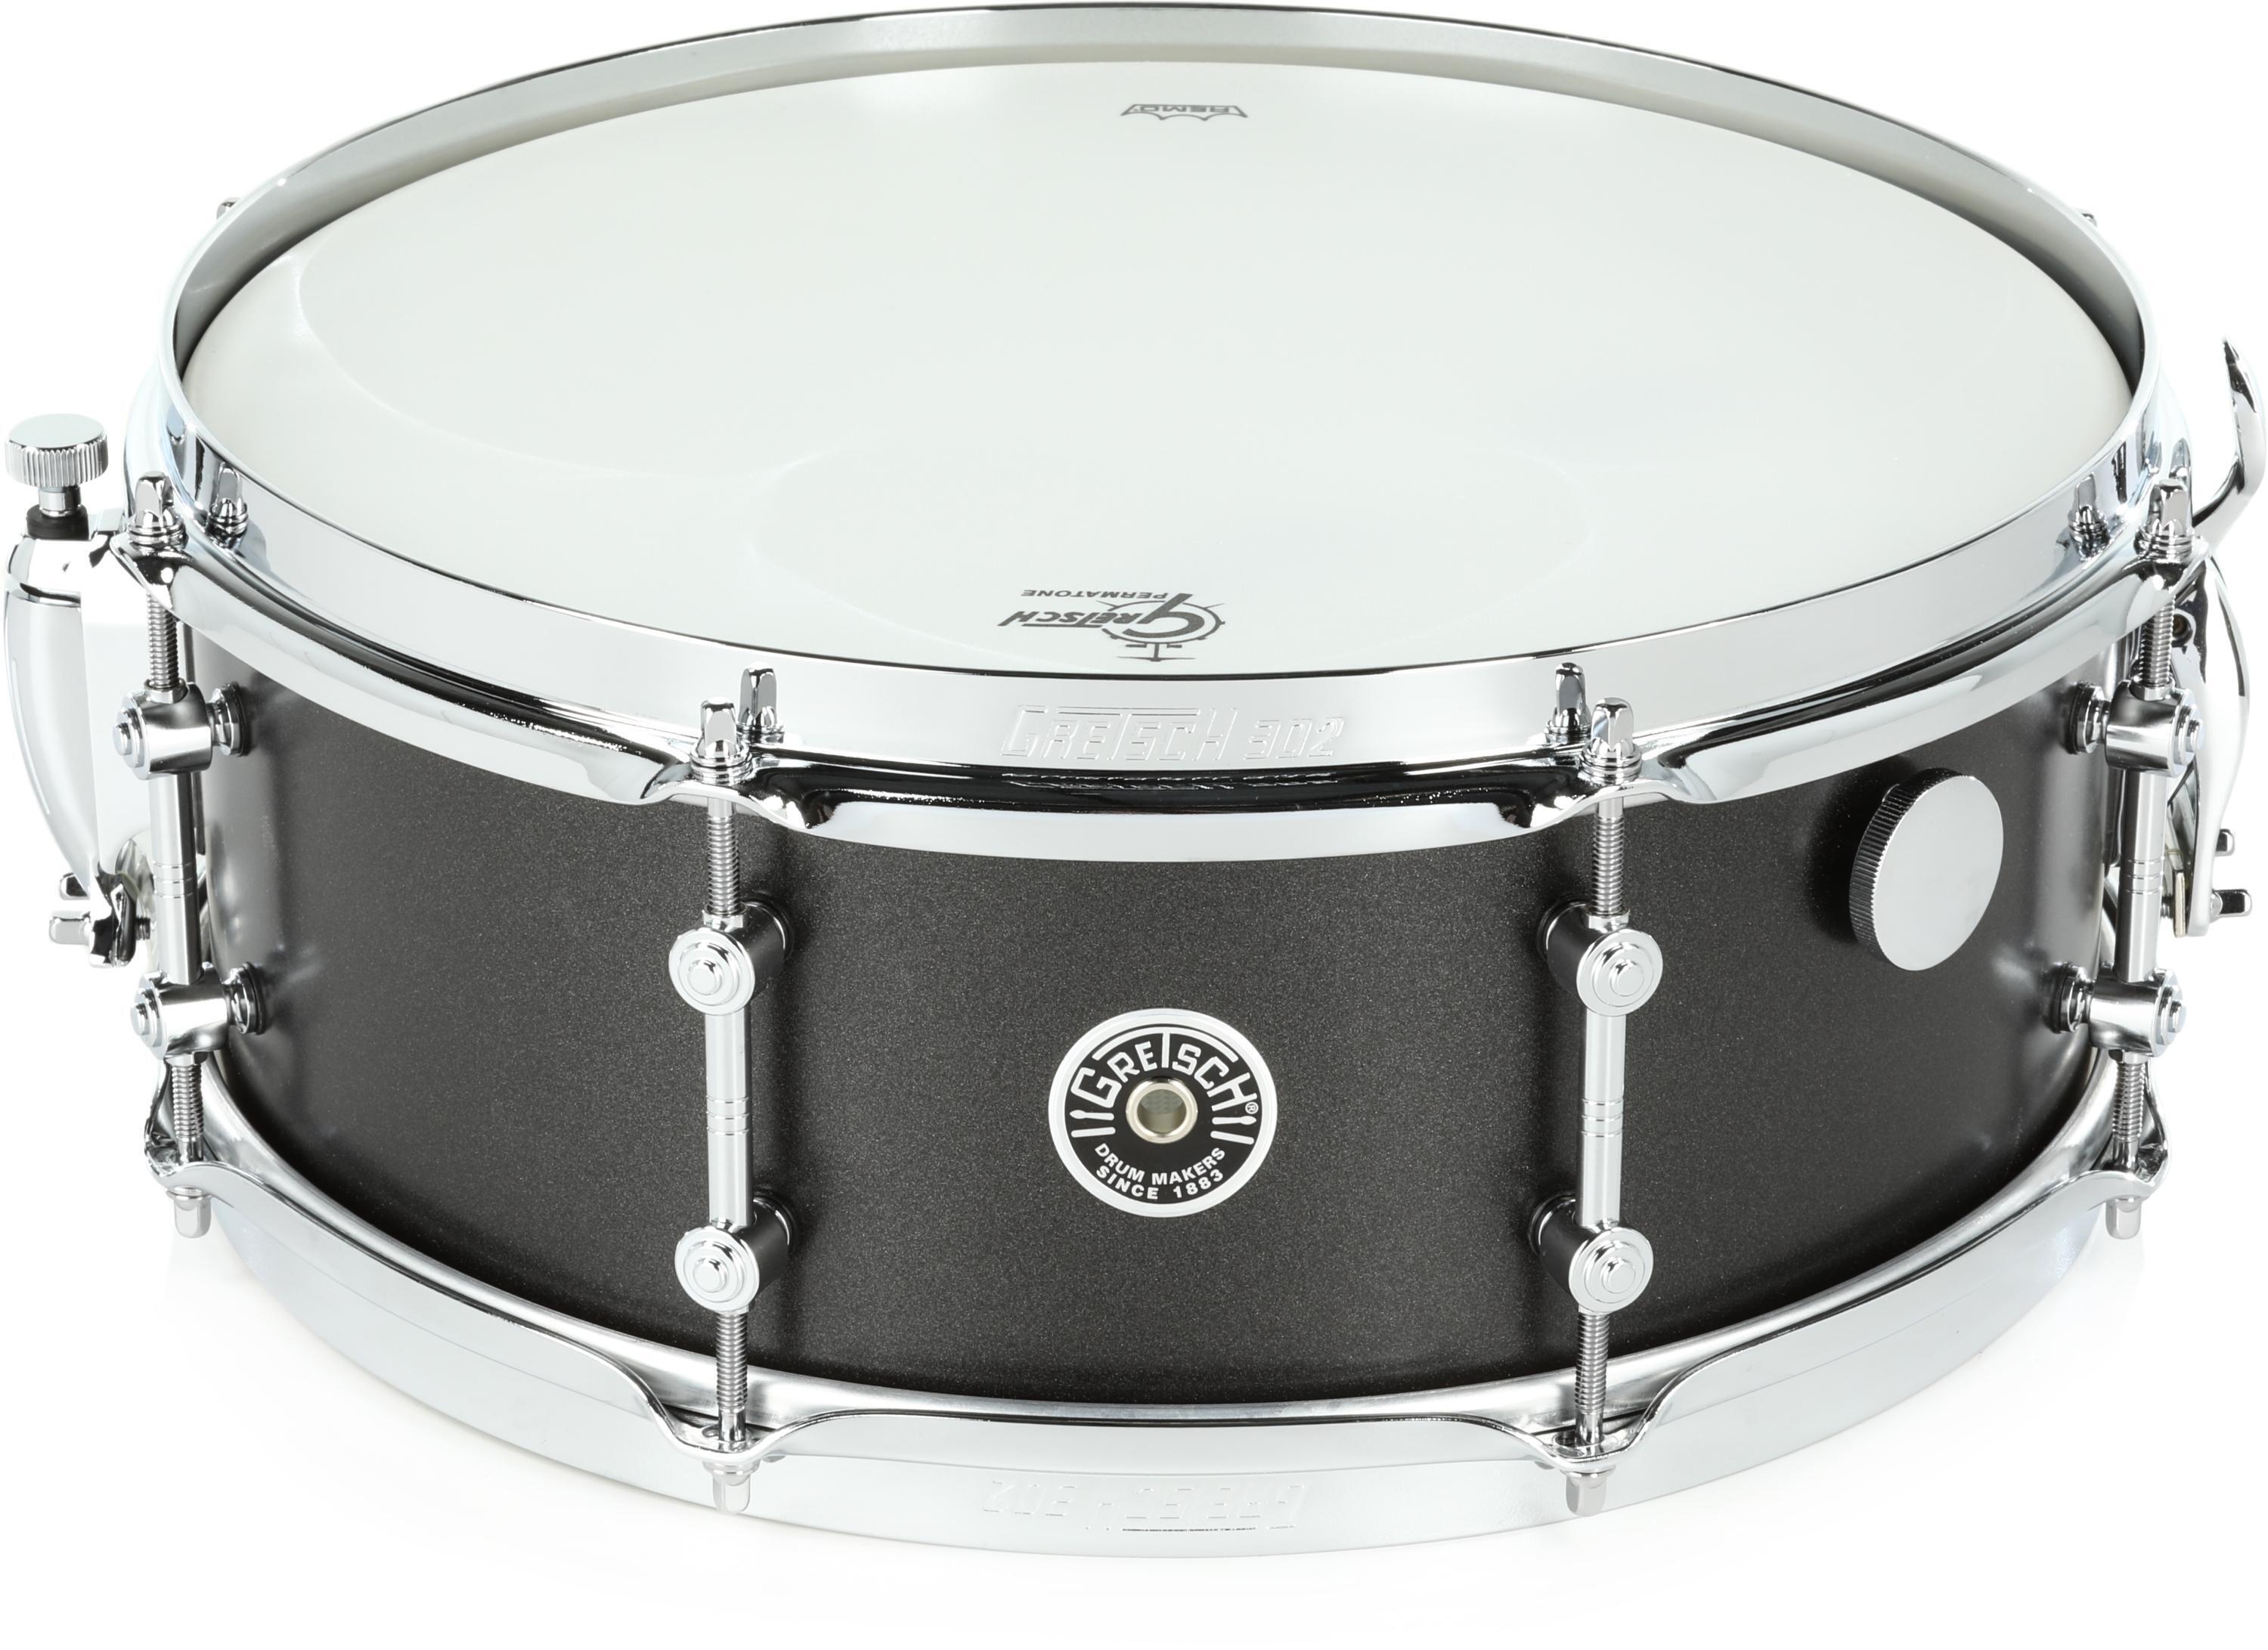 Gretsch Drums Brooklyn Standard Snare Drum - 5.5 inch x 14 inch